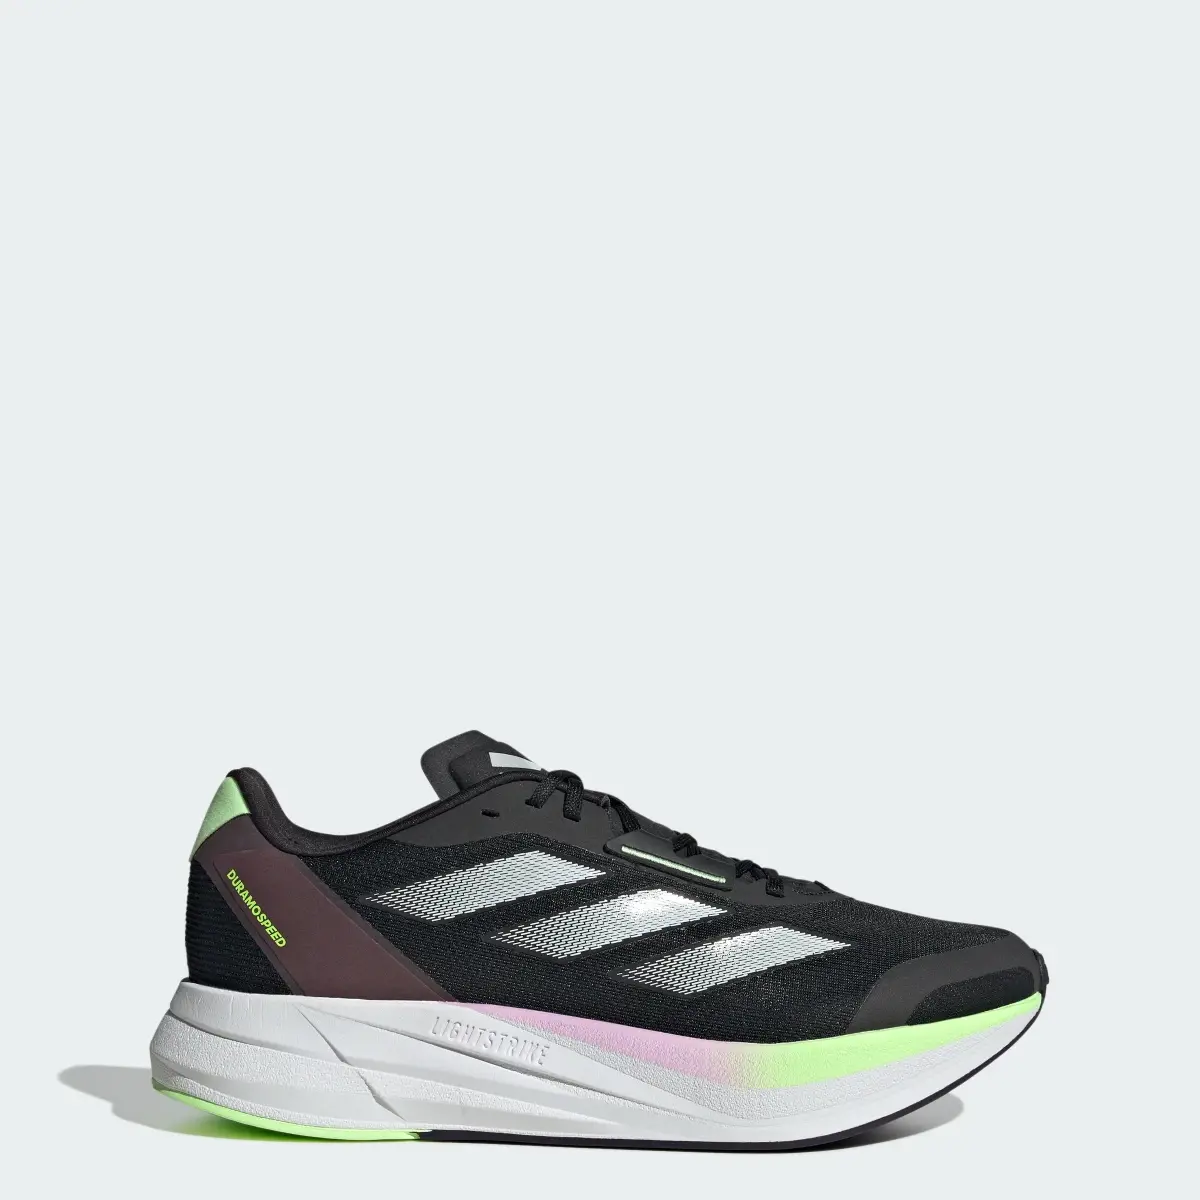 Adidas Duramo Speed Running Shoes. 1